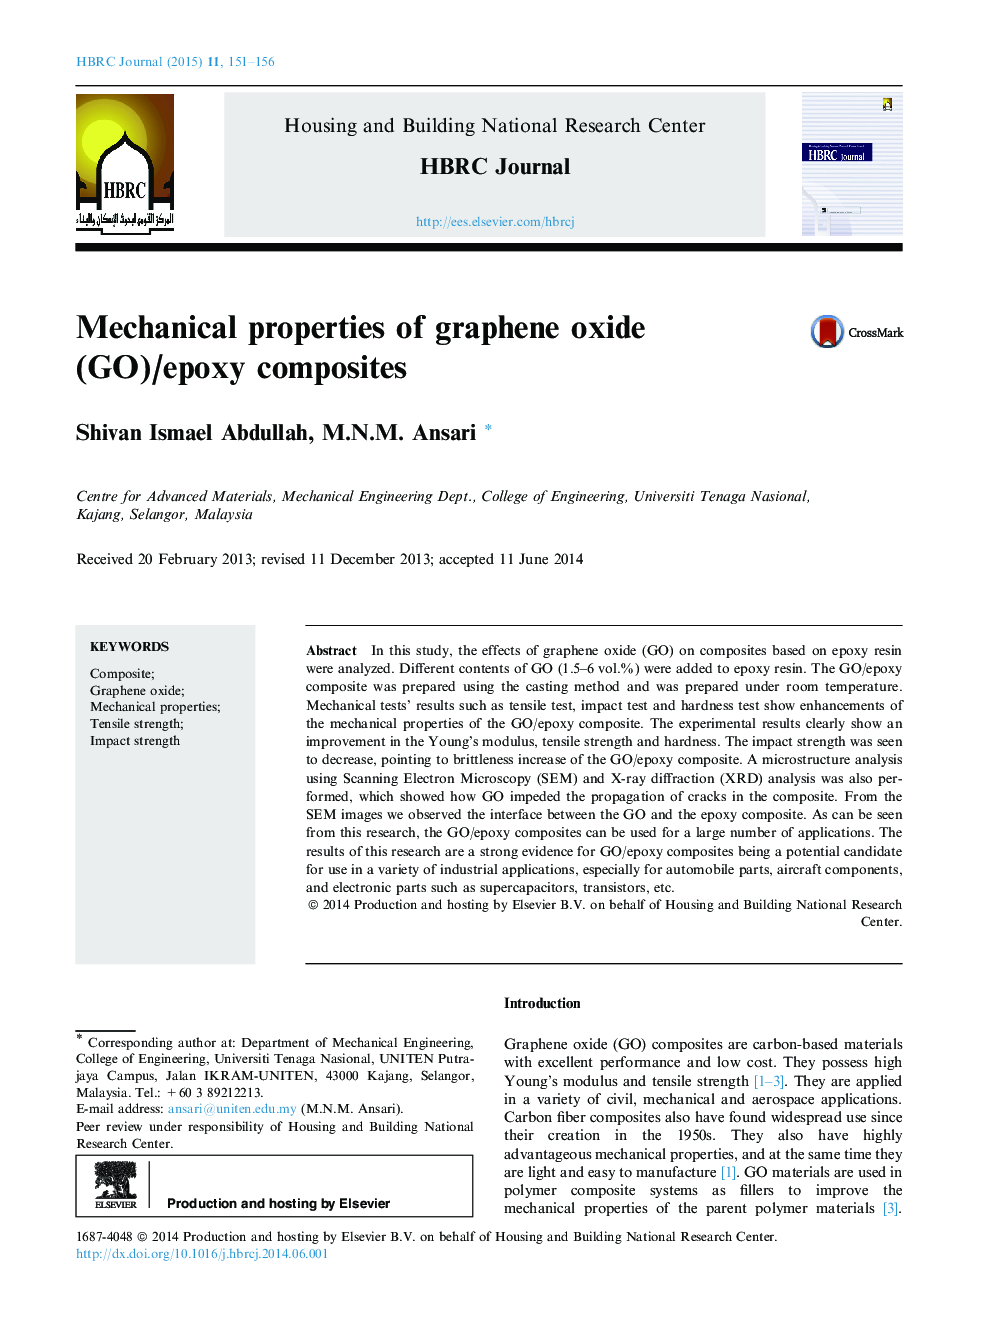 Mechanical properties of graphene oxide (GO)/epoxy composites 